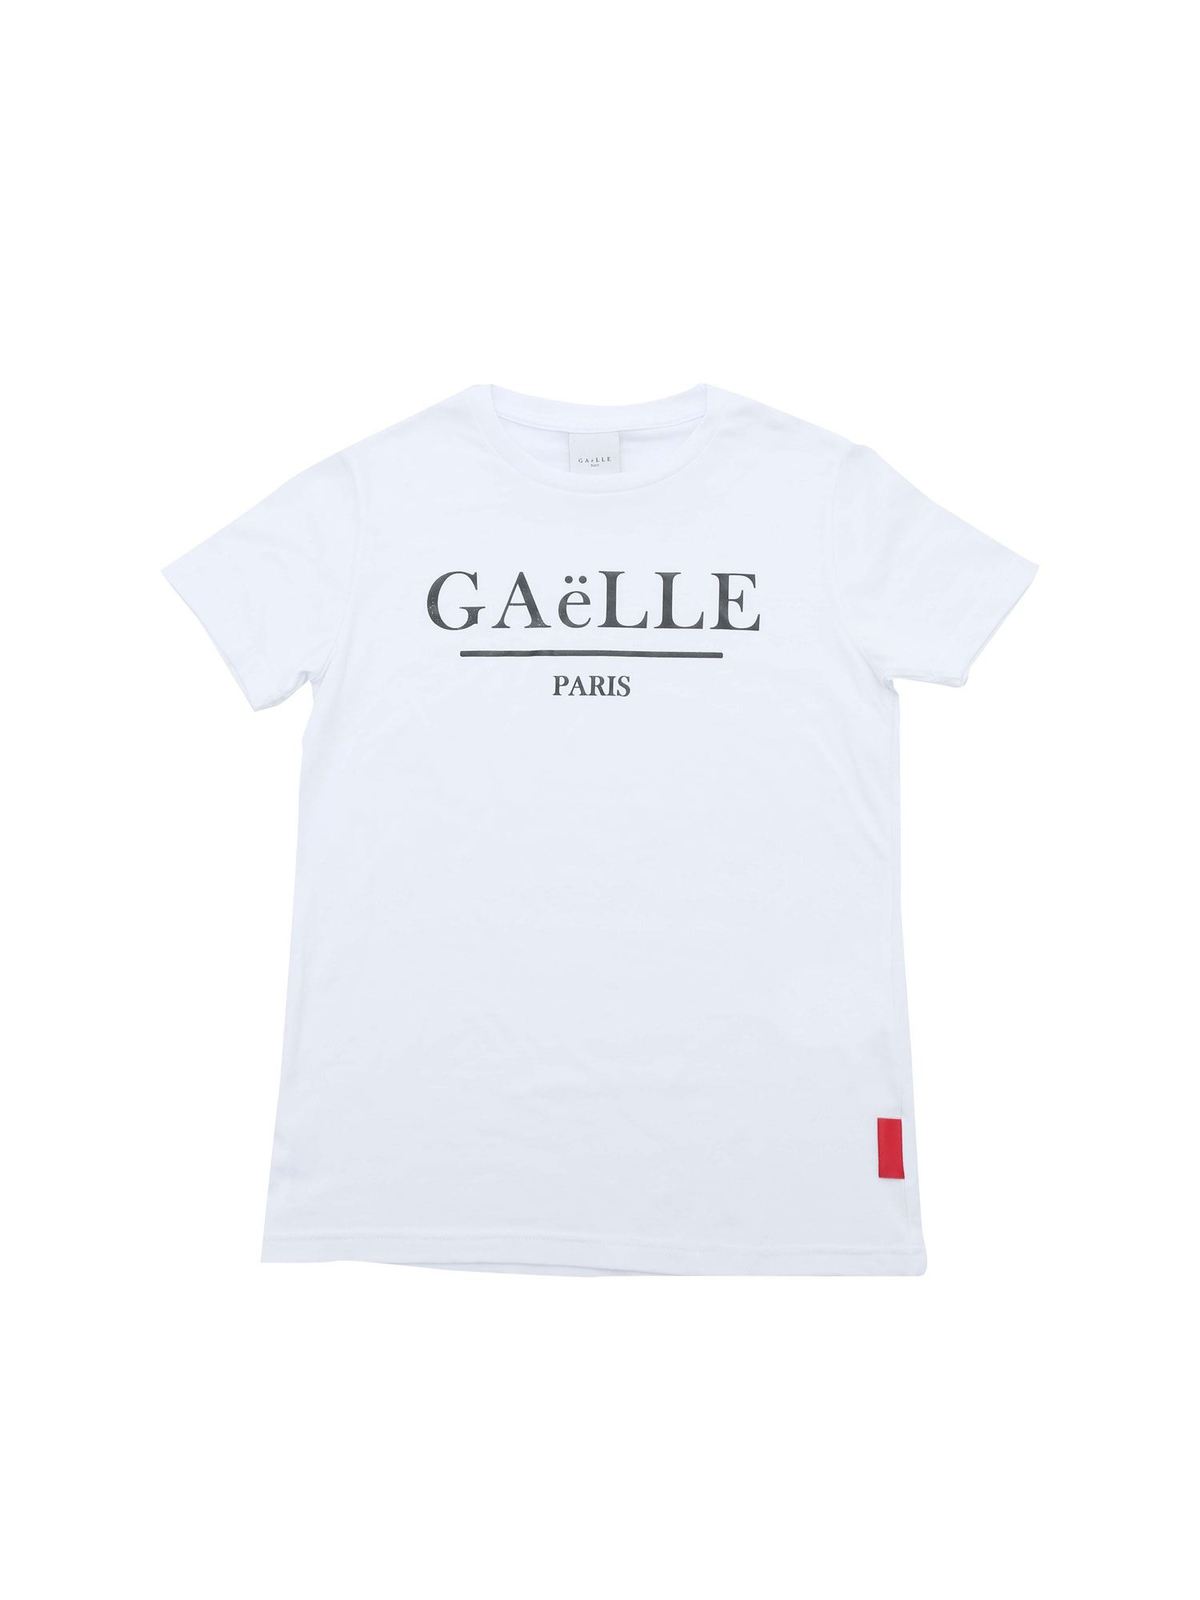 GAELLE PARIS WHITE T-SHIRT WITH FRONT LOGO